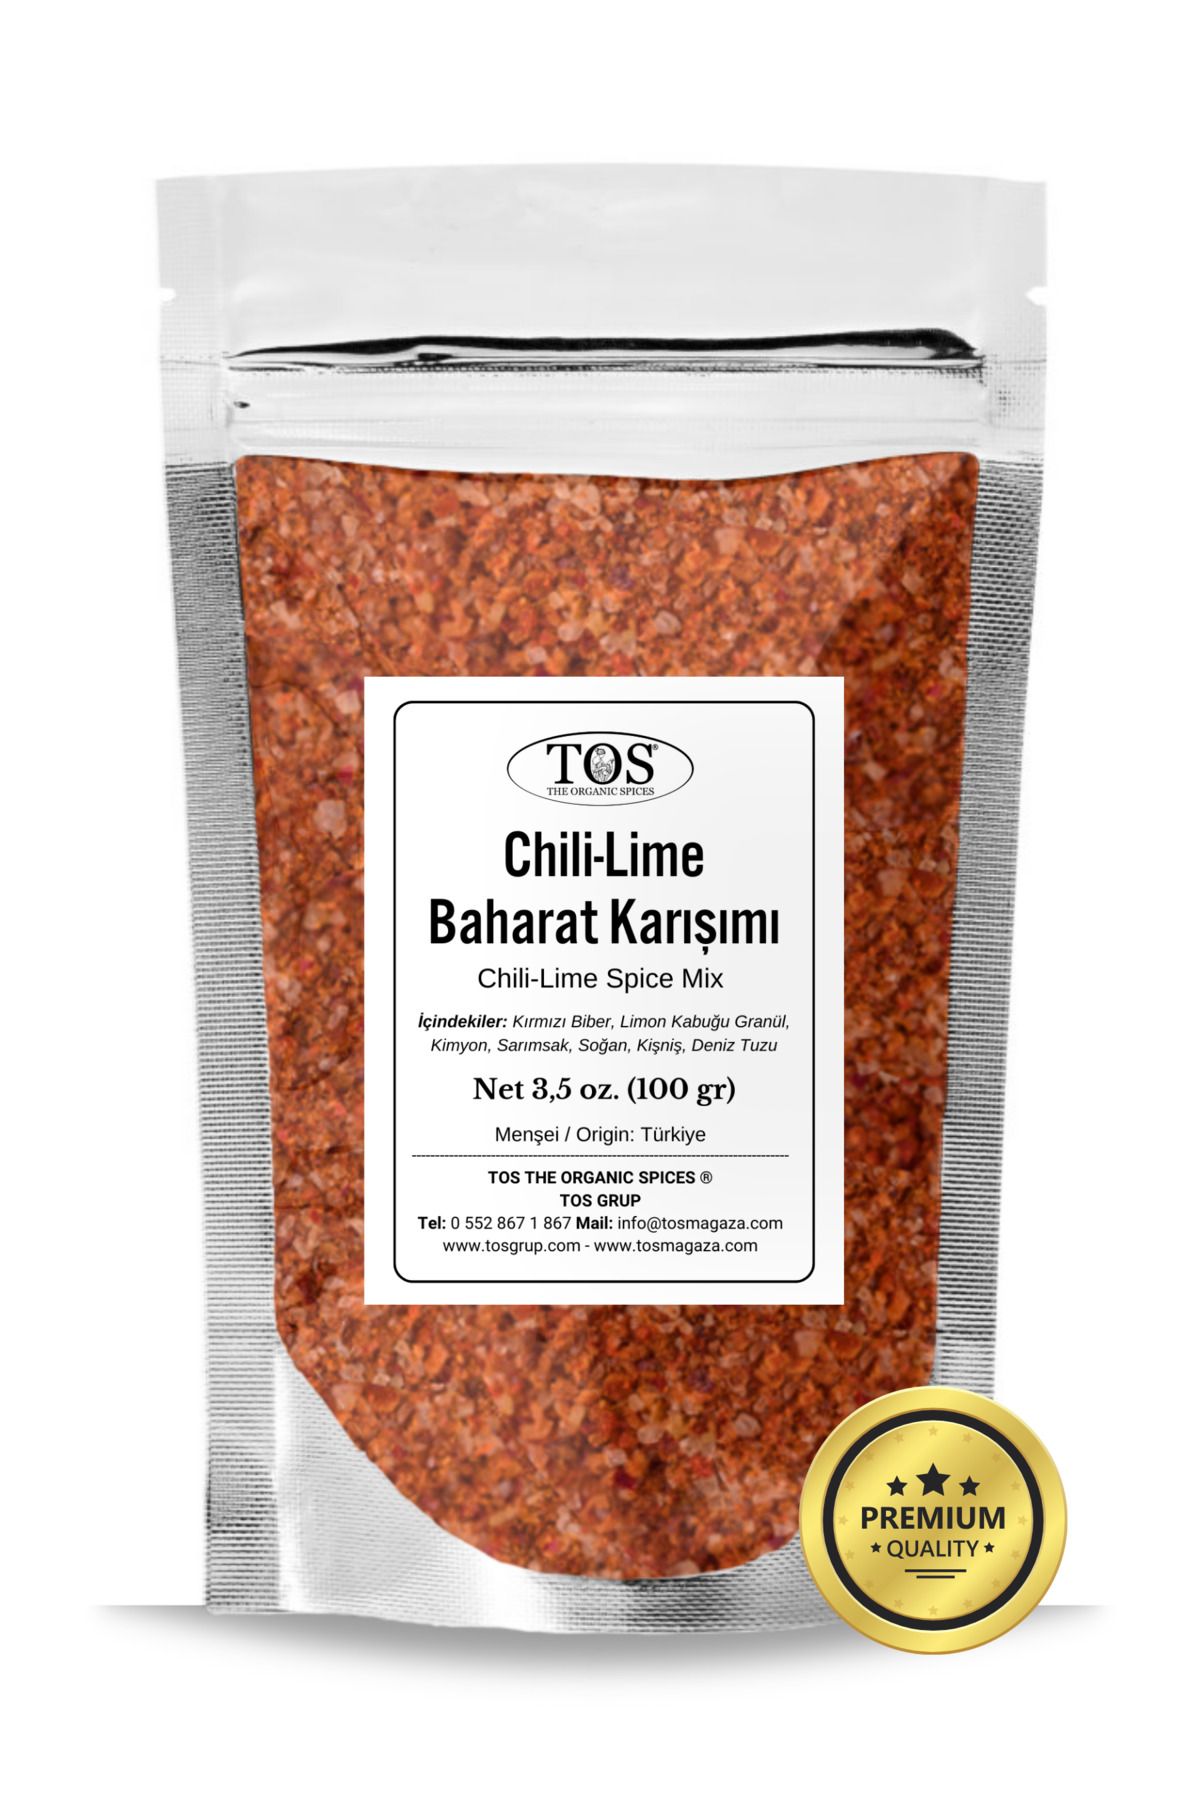 TOS The Organic Spices Chili-lime Baharat Karışımı 100 Gr